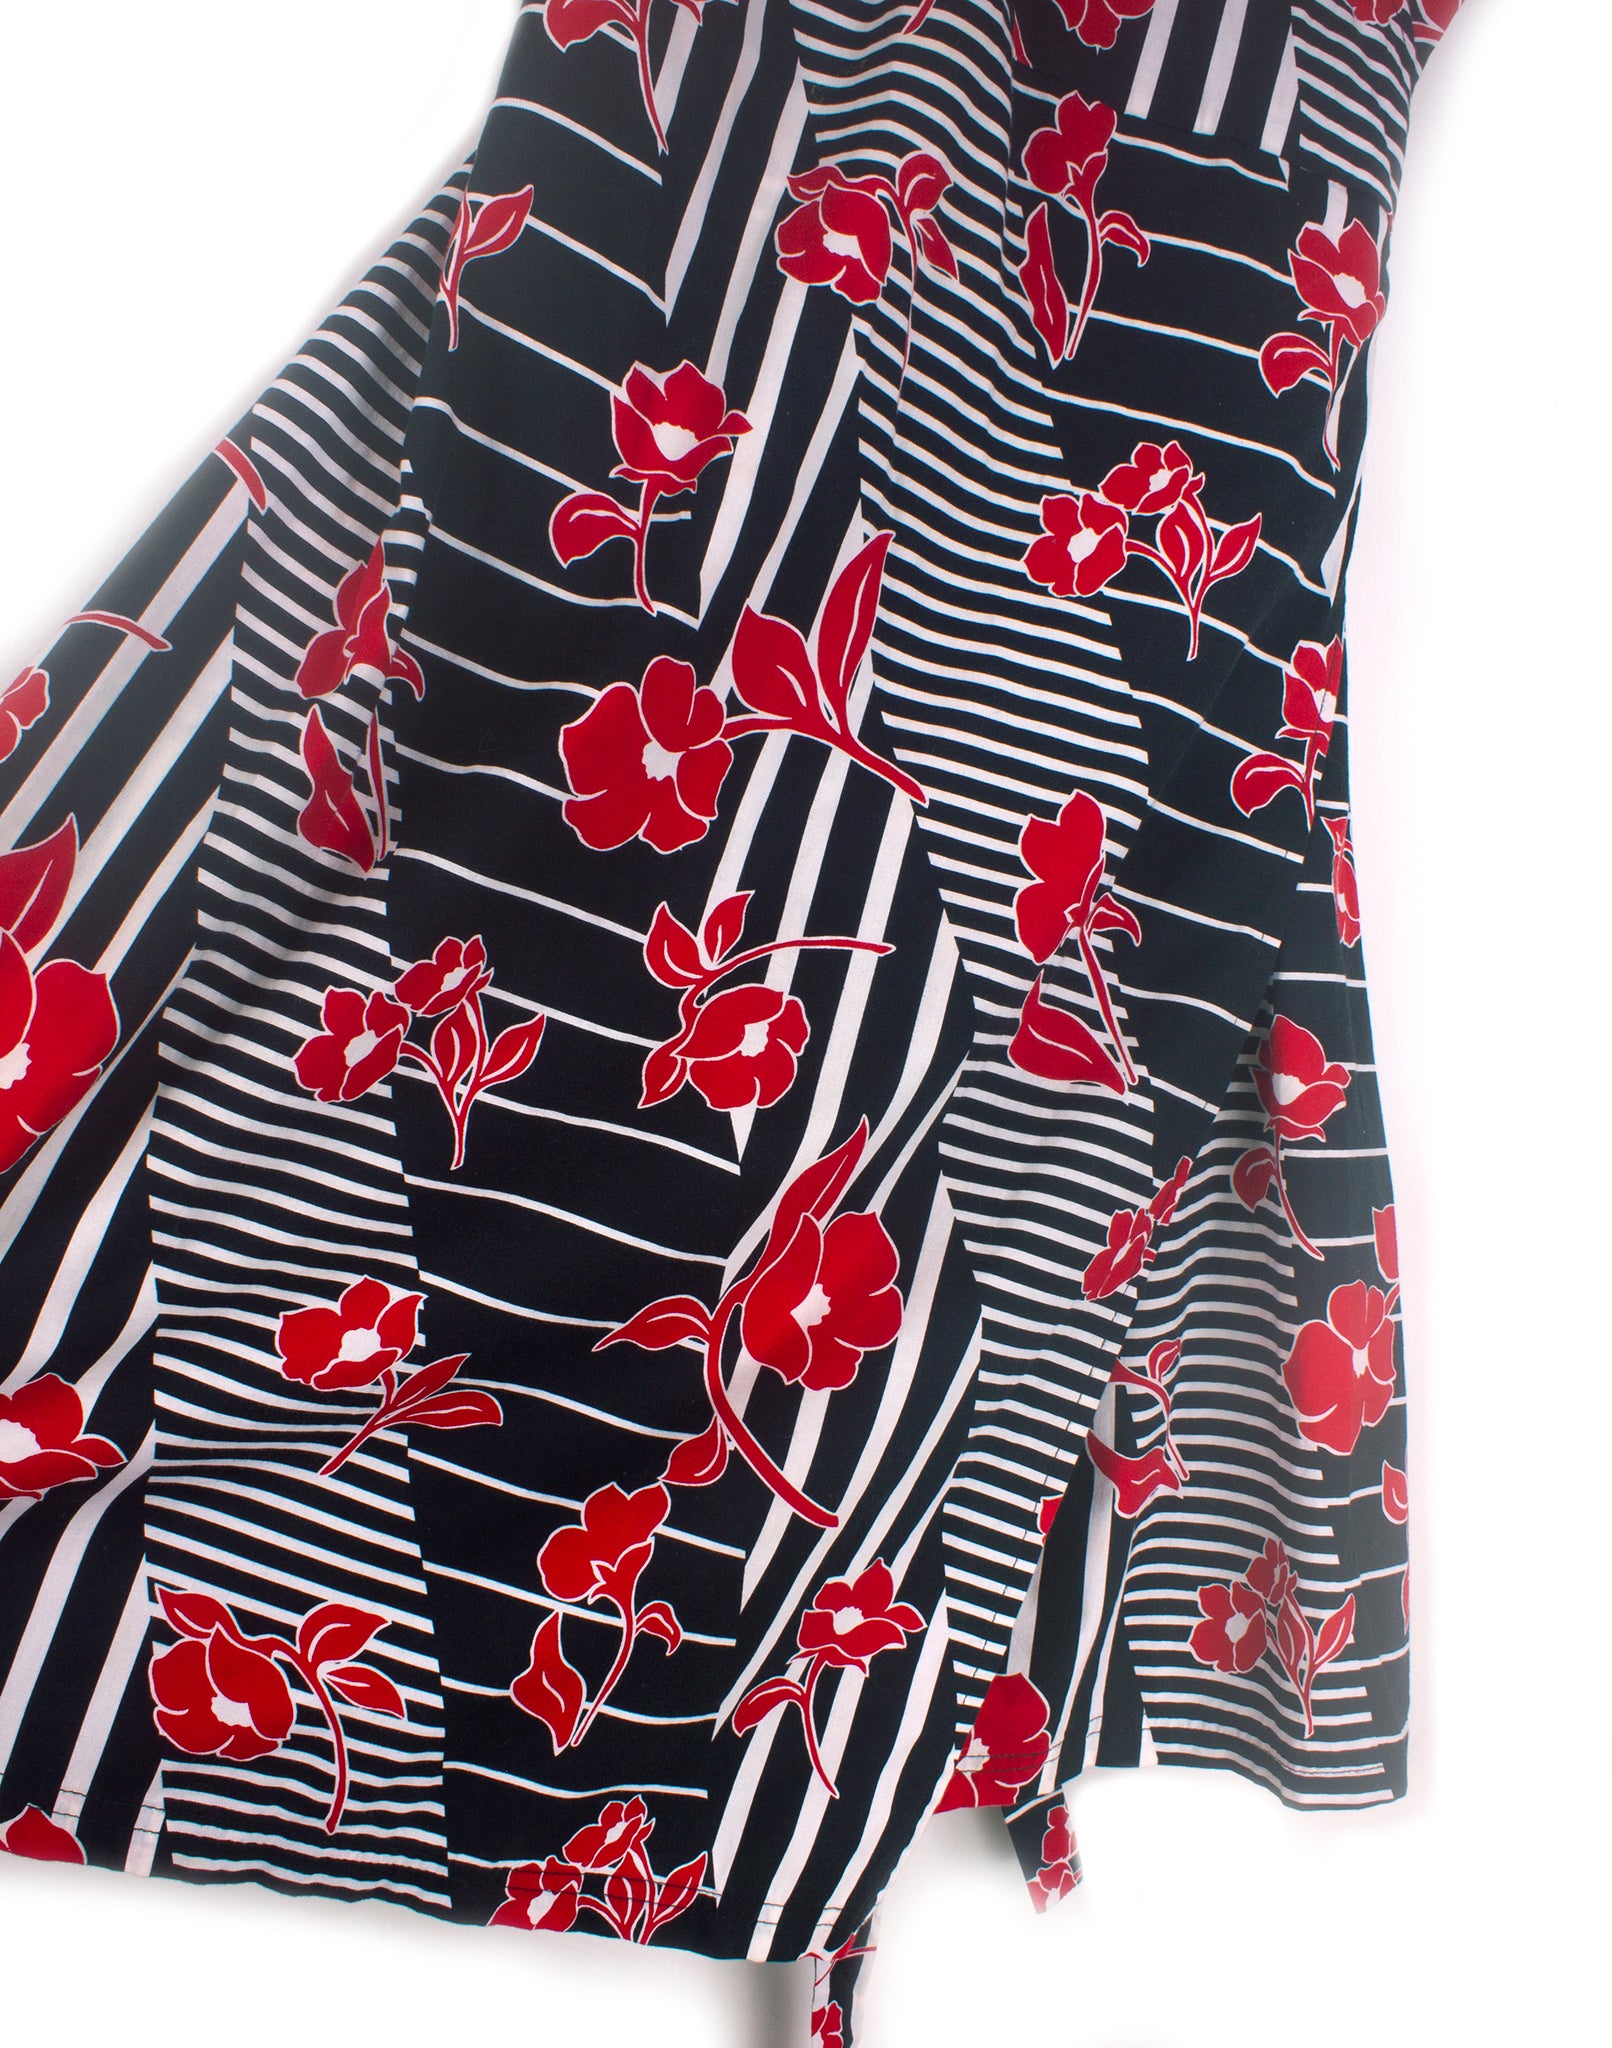 Leona Edmiston Black Red Print Wrap Dress - Size S / M